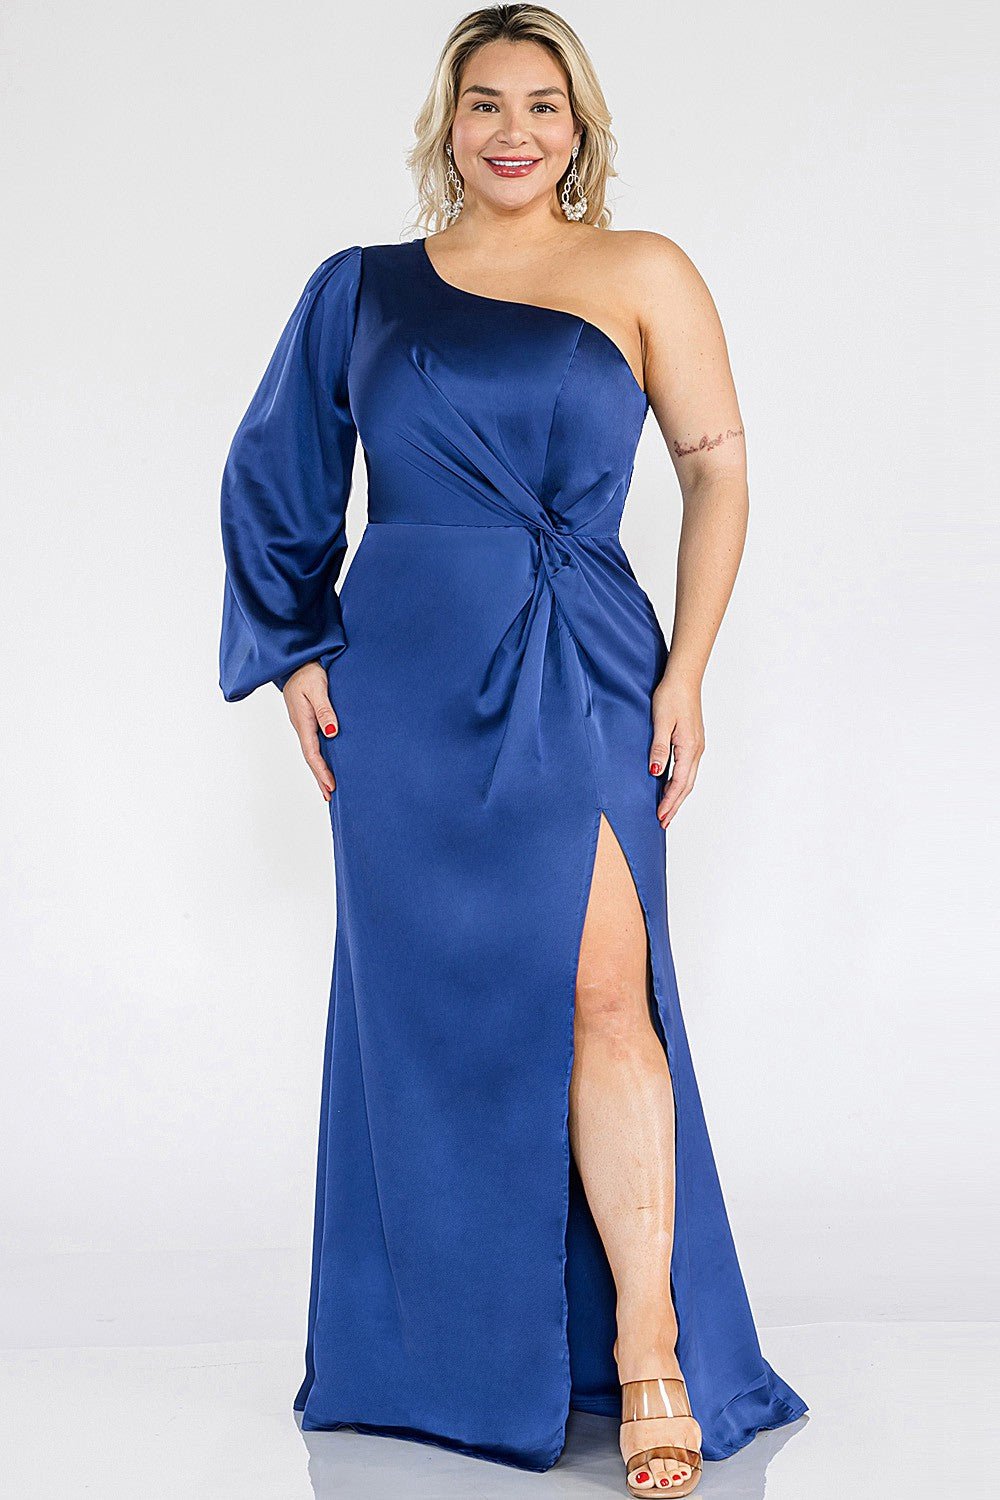 Aurora - azul - Cindel vestidos maxi, midi, mini, para toda ocasion, largos, de fiesta, de boda